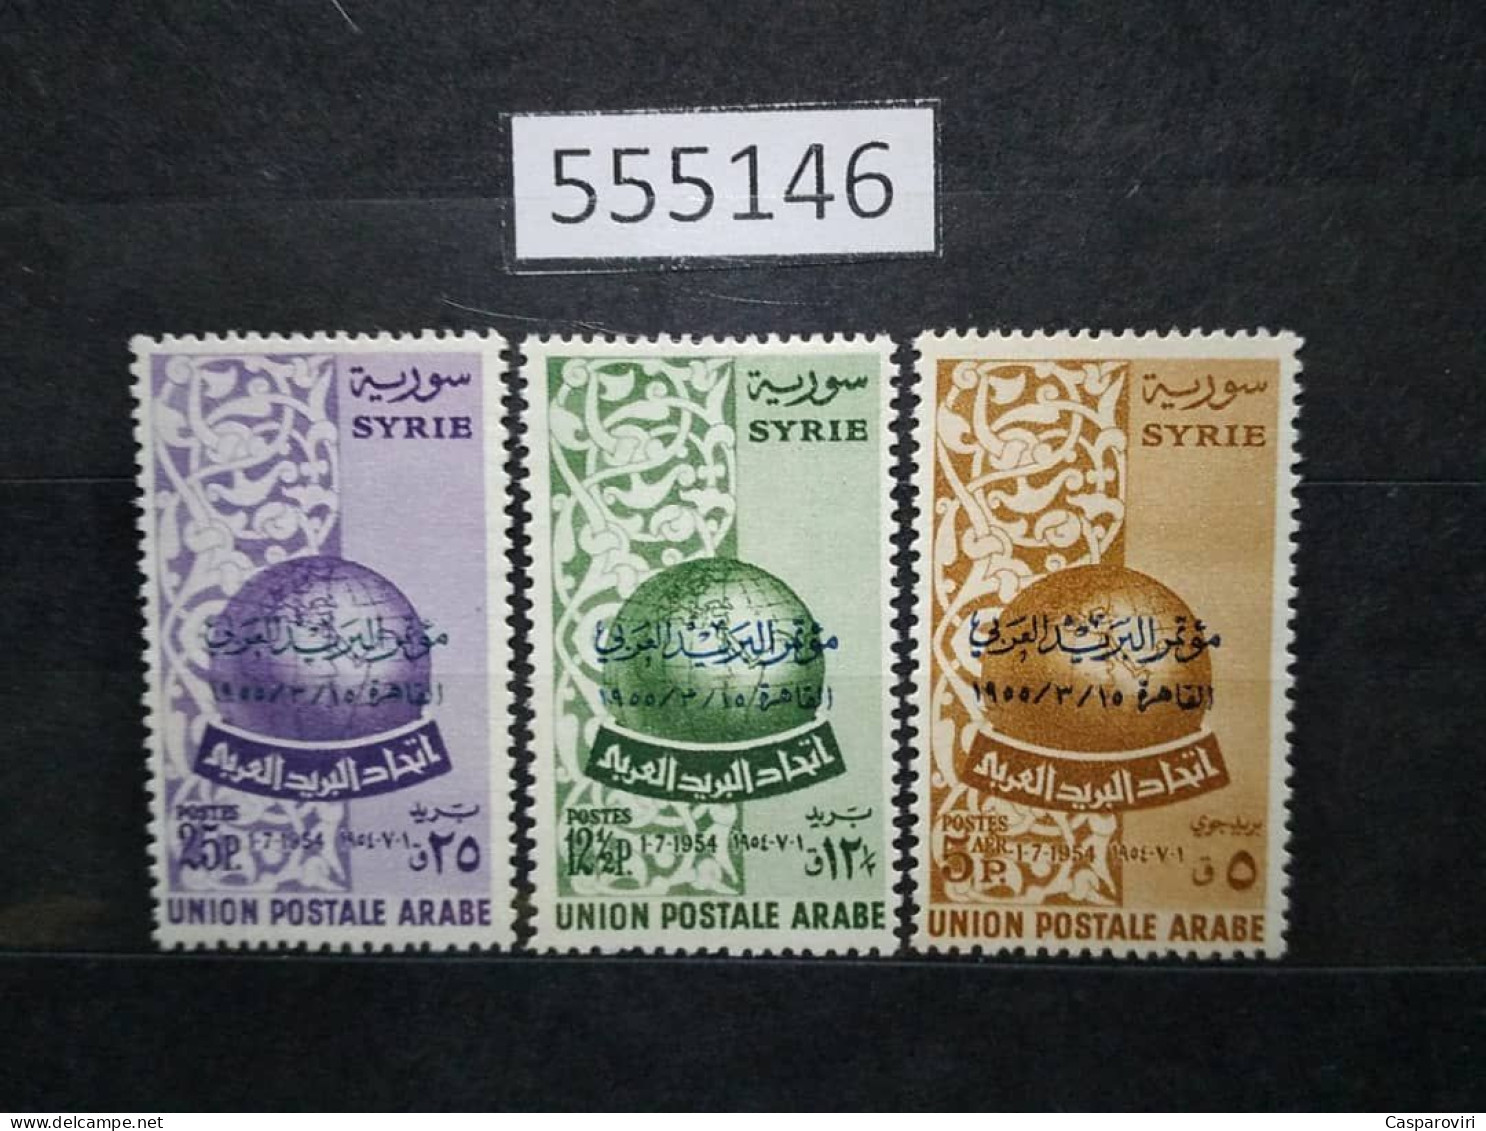 555146; Syria; 1955; Globe And Arabesque; Ovpt. Arab Postal Union Congress At Cairo; GB 677 - 679; MNH** - Syria